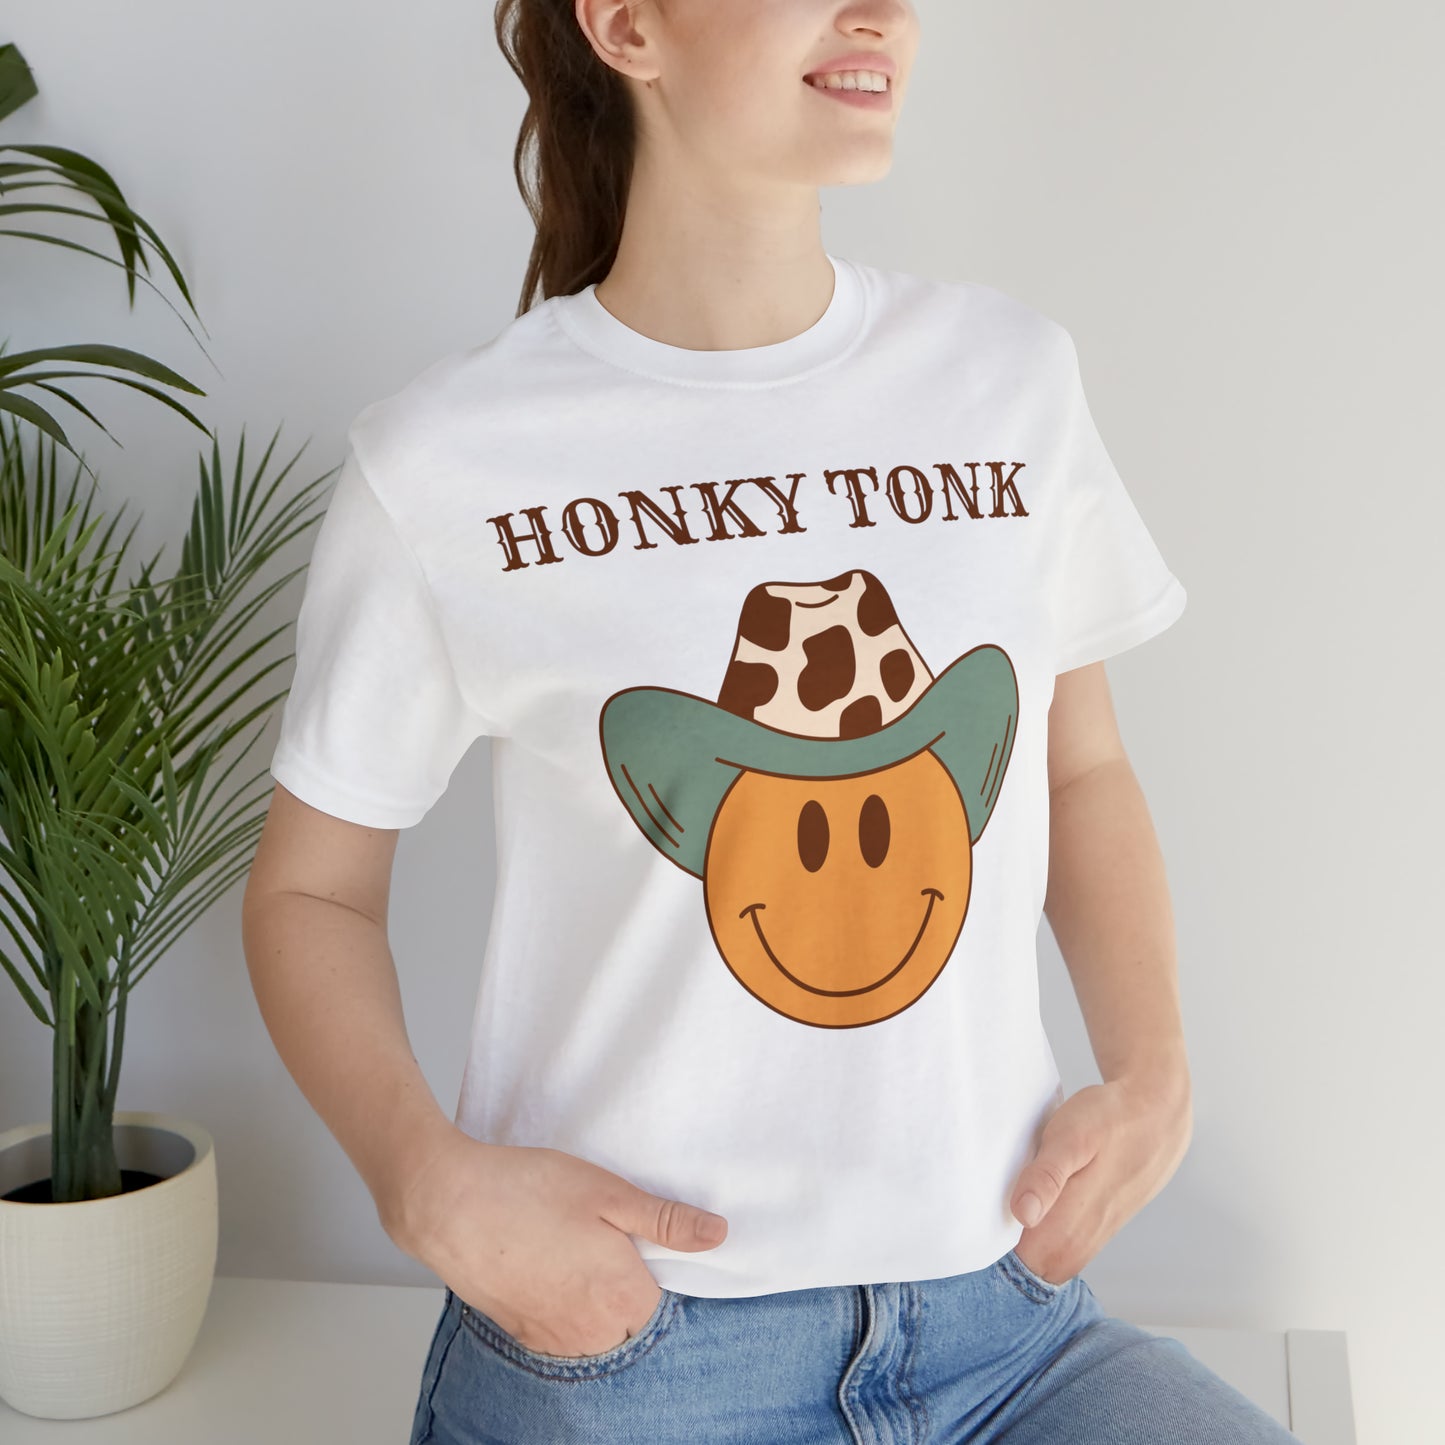 Honky Tonk | Unisex Jersey Short Sleeve Tee